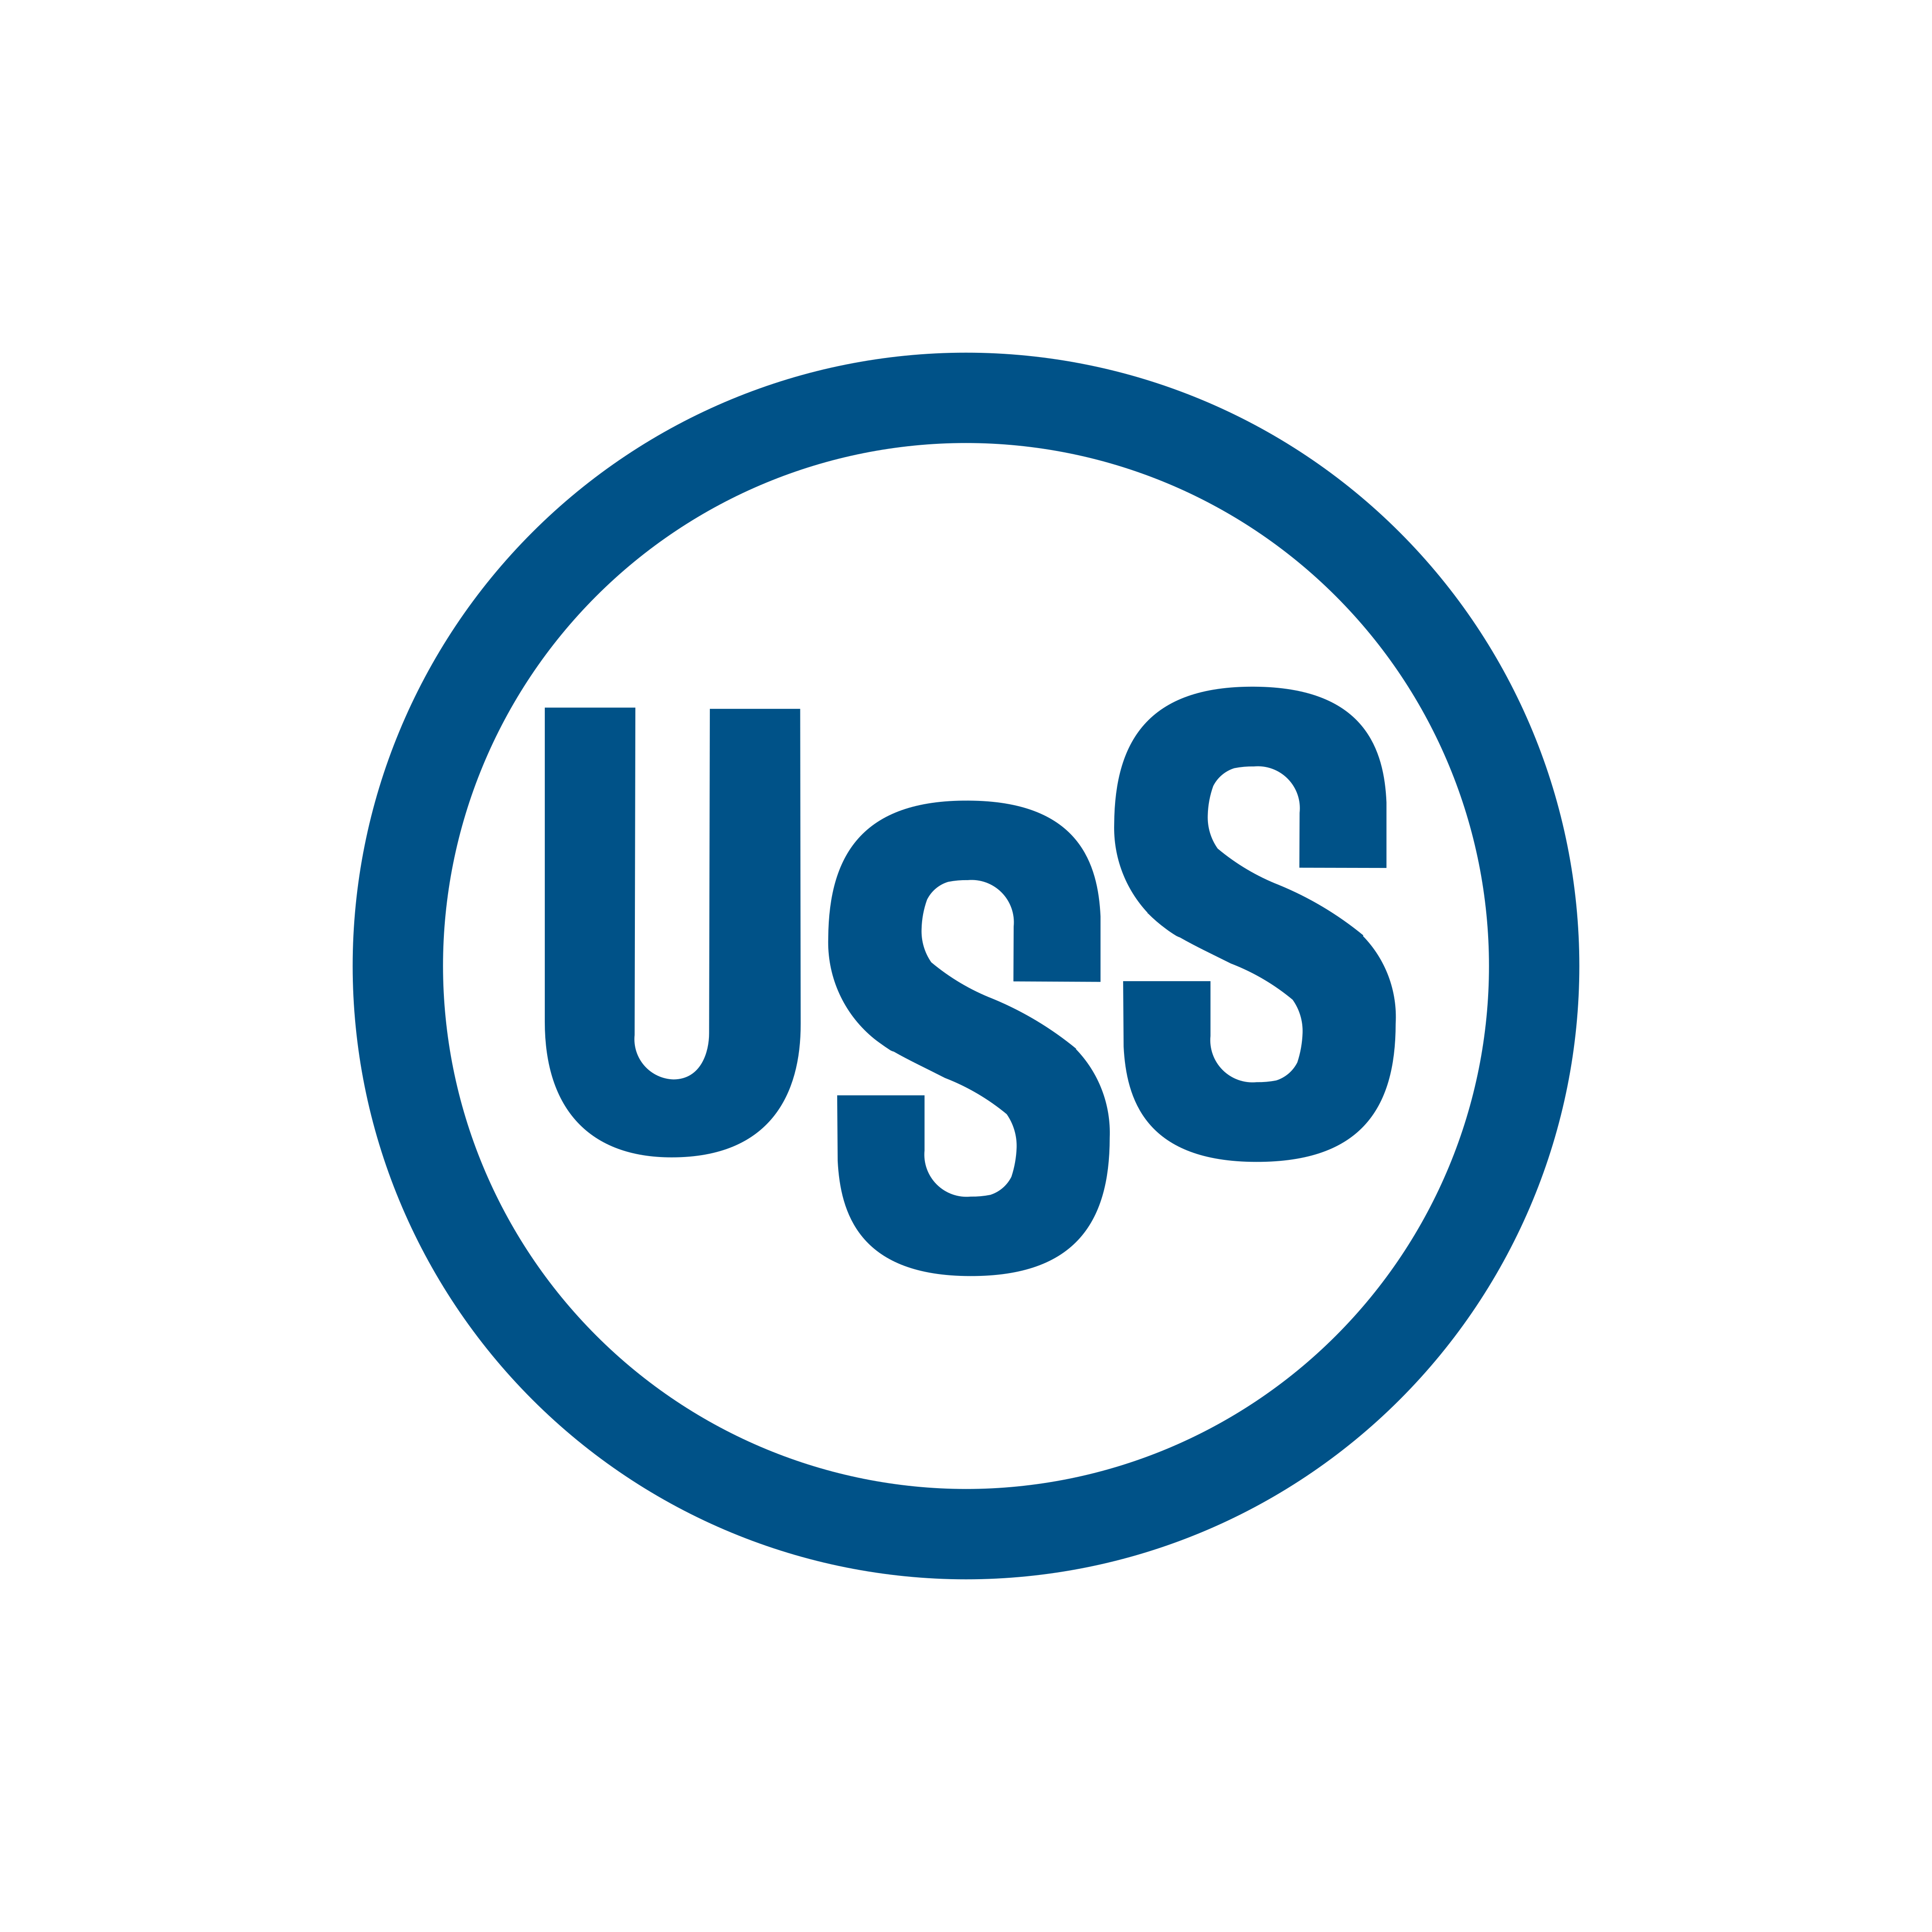 USS Logo - United States Steel Logo PNG.